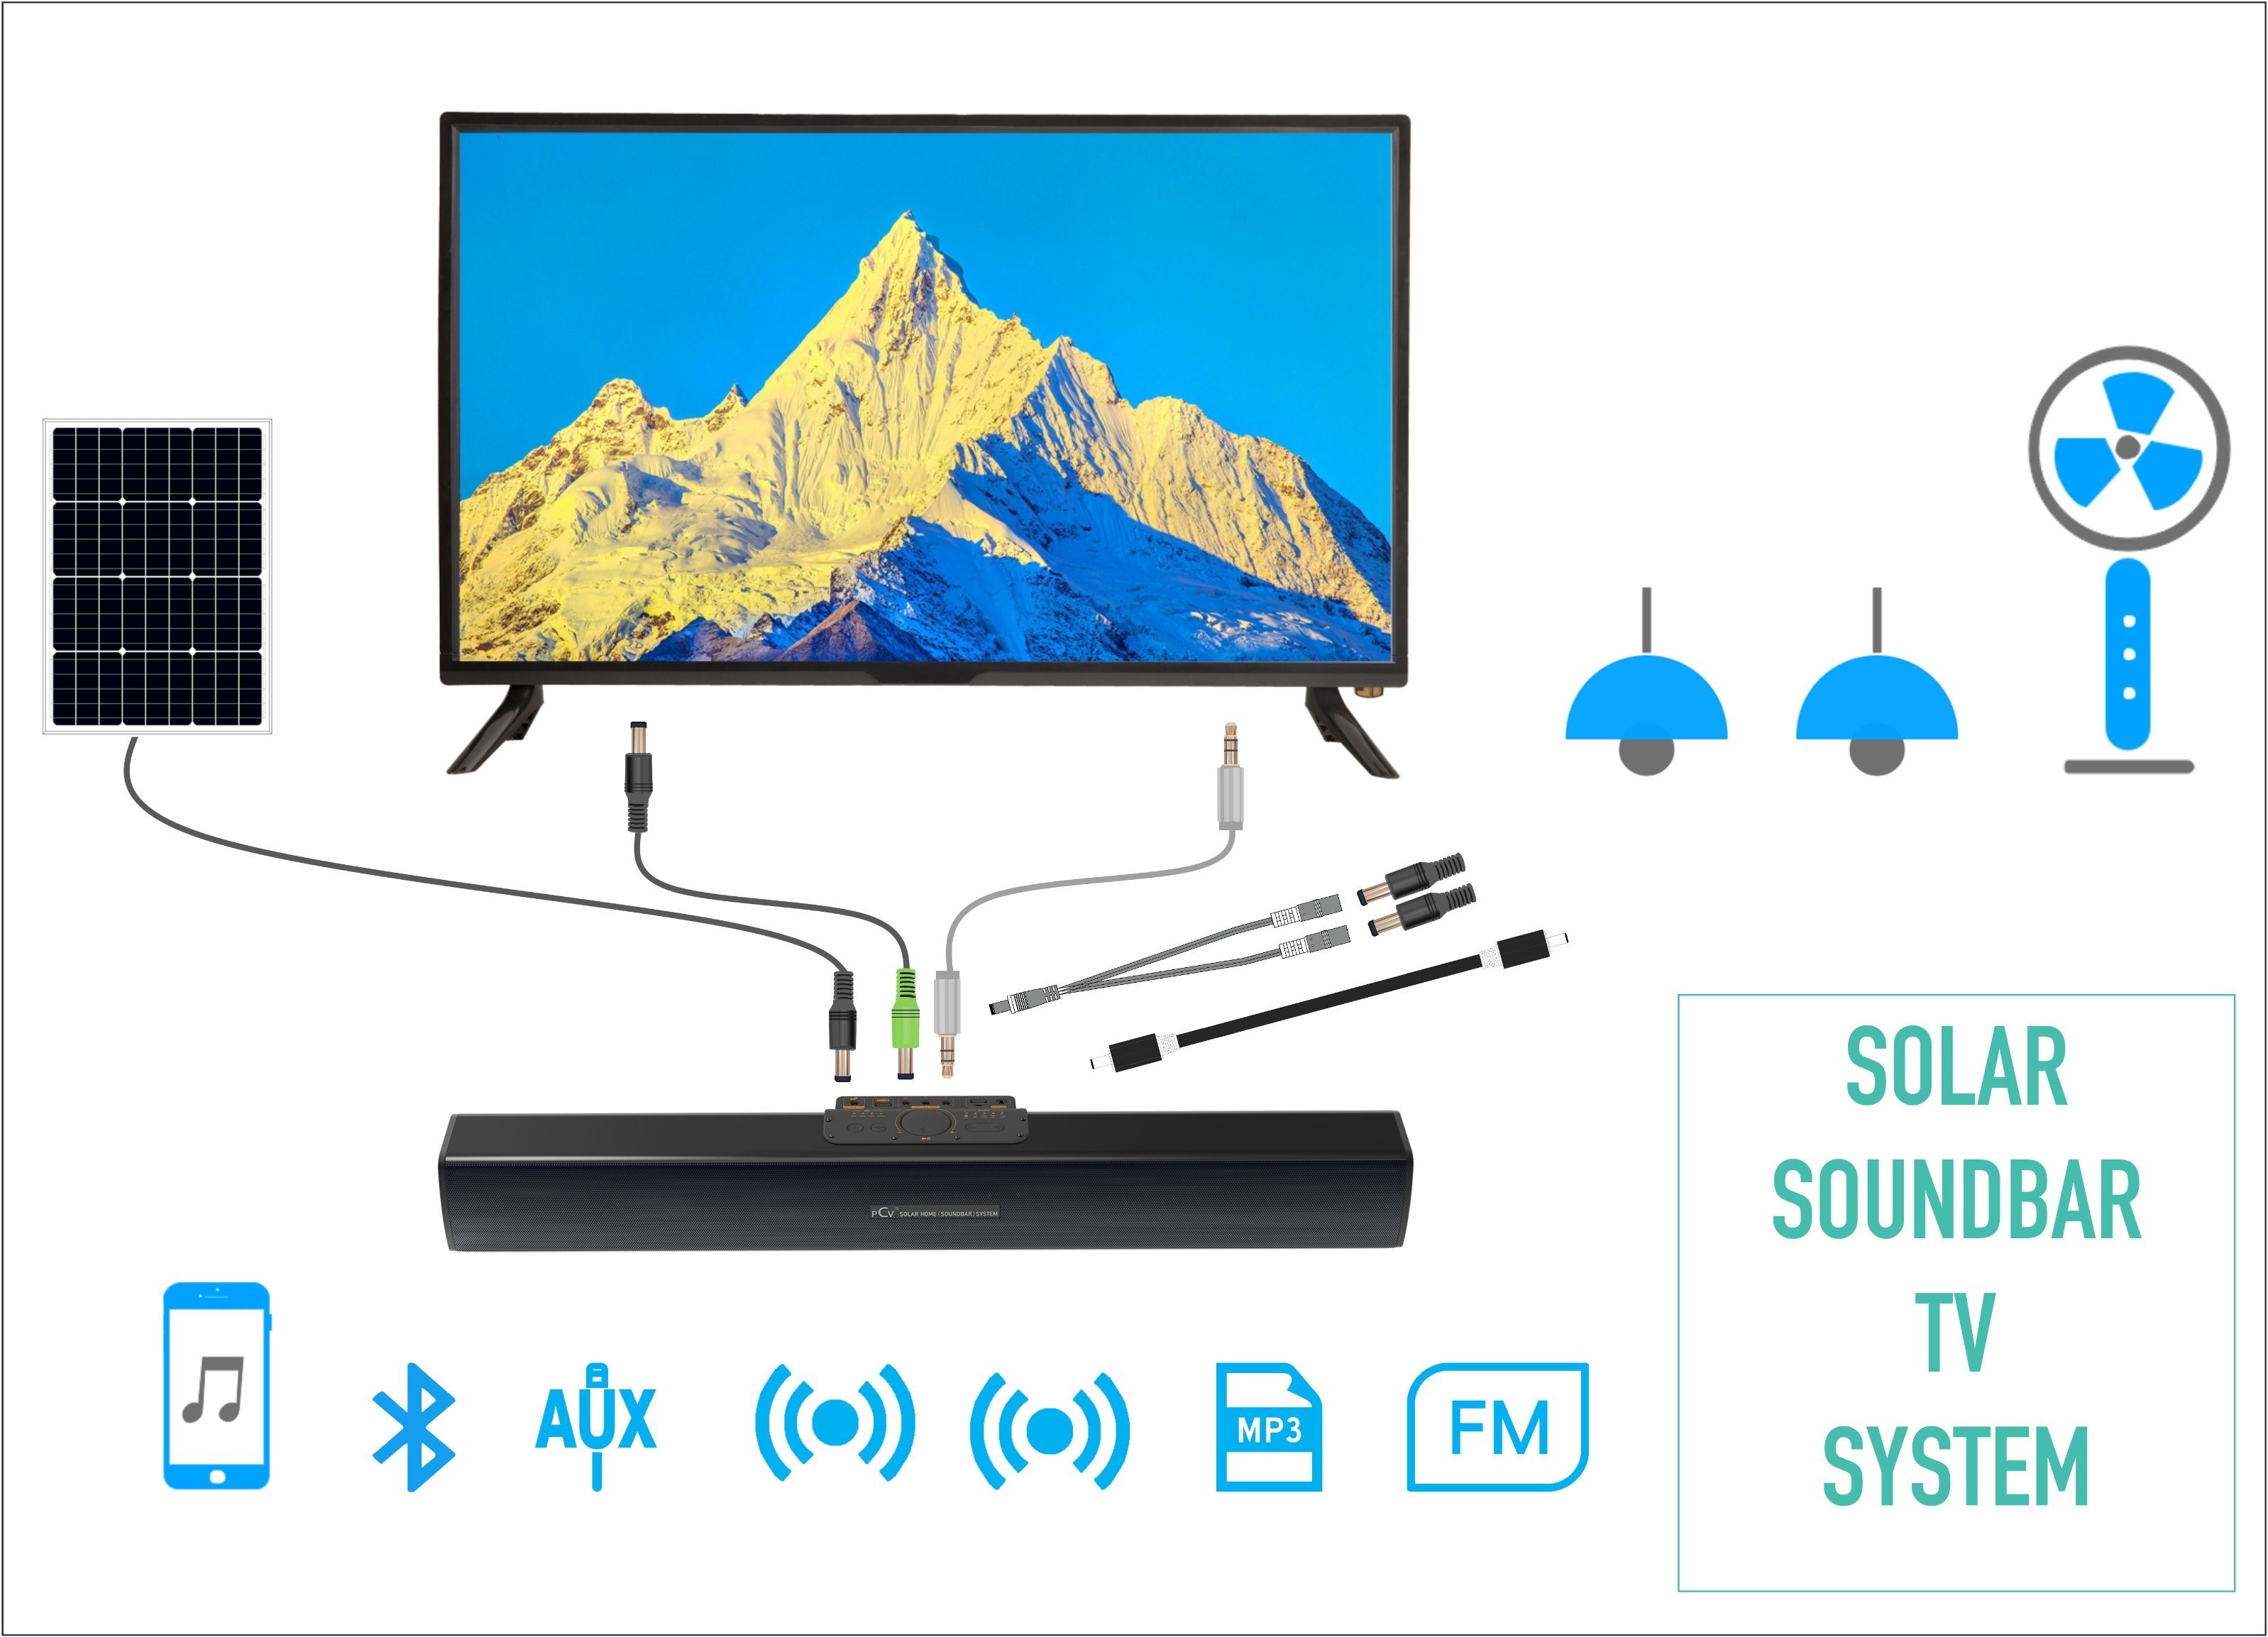 Soundbar Soundbar Vofull 2.0 Soundbar TV Wireless Sound Bar Home Theater Surround Speaker System